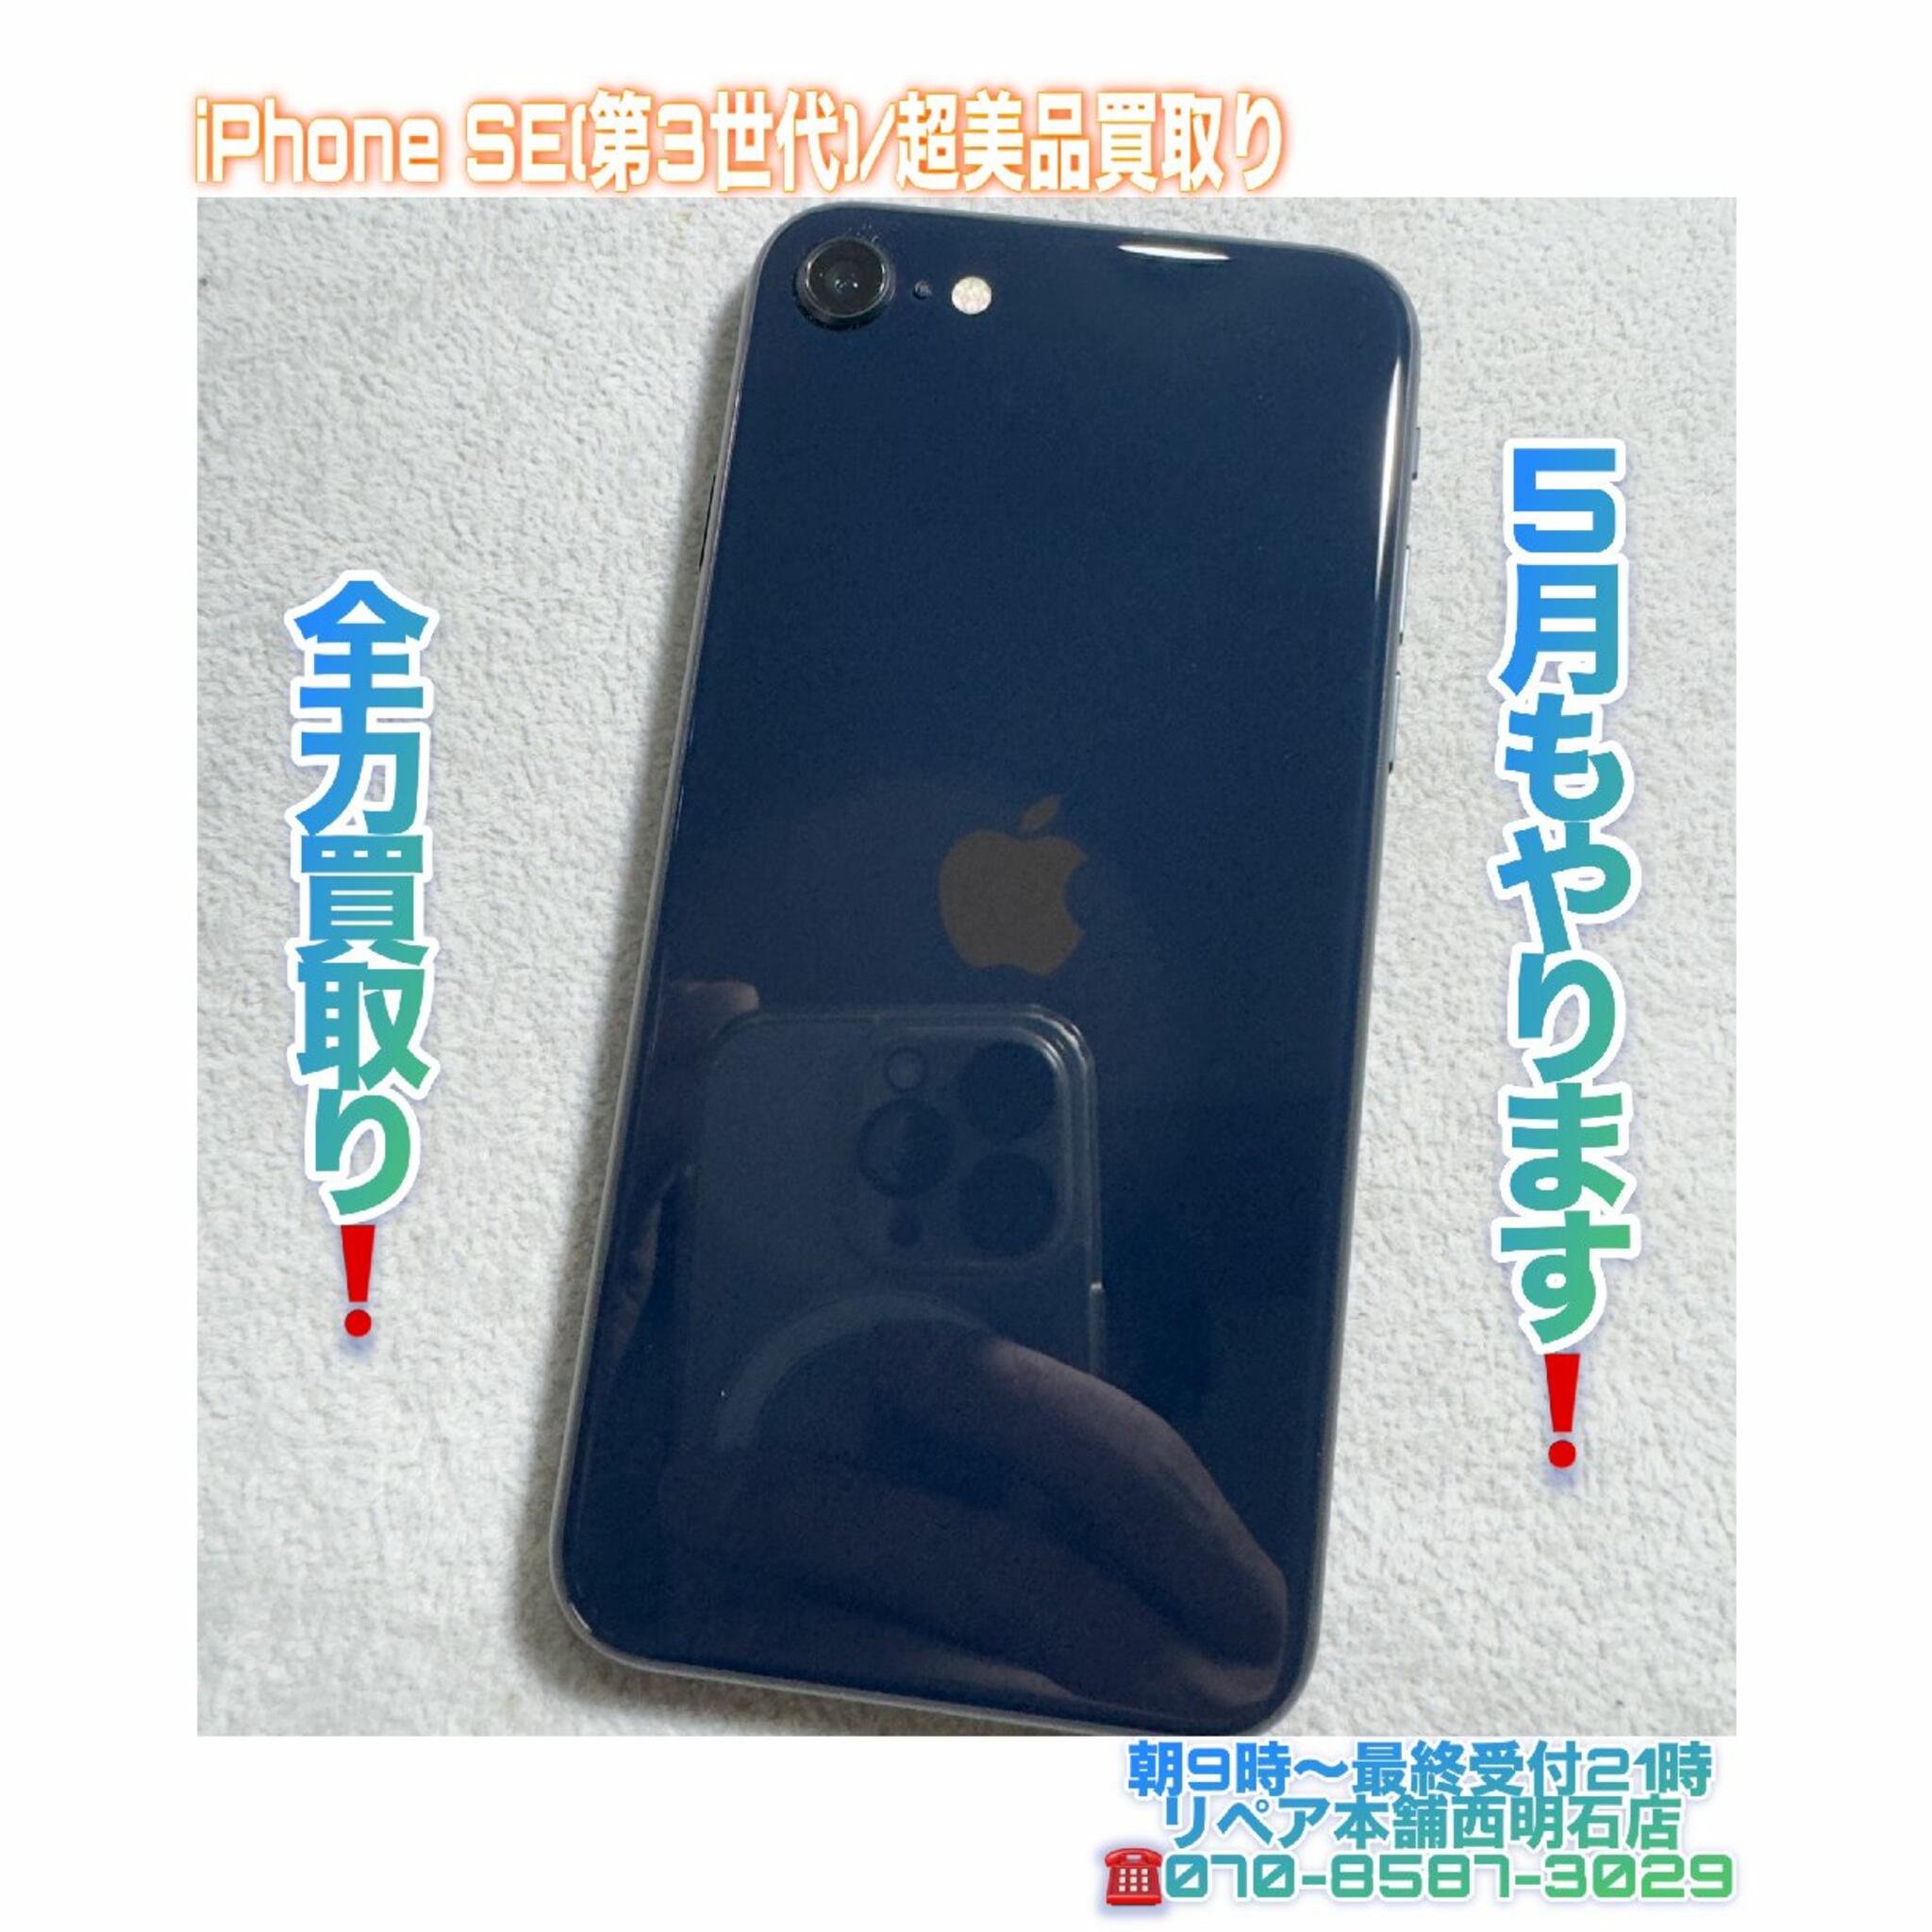 iPhone修理 明石 リペア本舗 西明石店からのお知らせ(💡神戸市西区の方より、iPhone SE(第3世代)買取りのご依頼を頂きました🙏)に関する写真